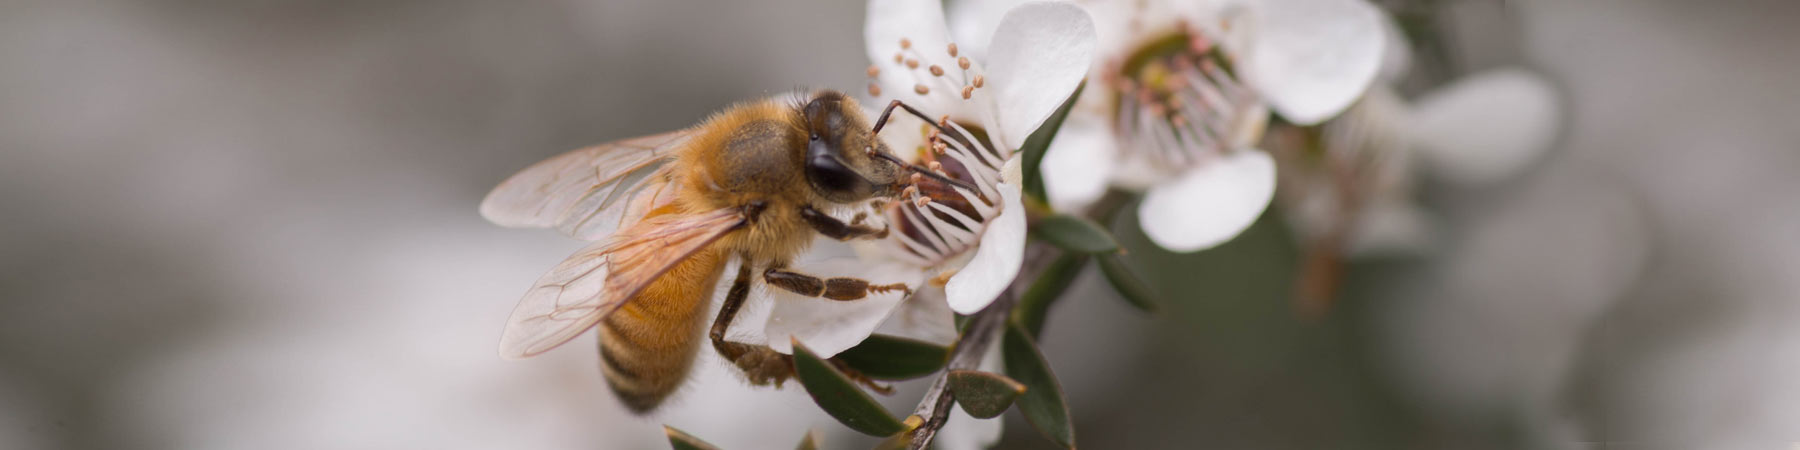 Honey Bee on Manuka Flower collecting nectar